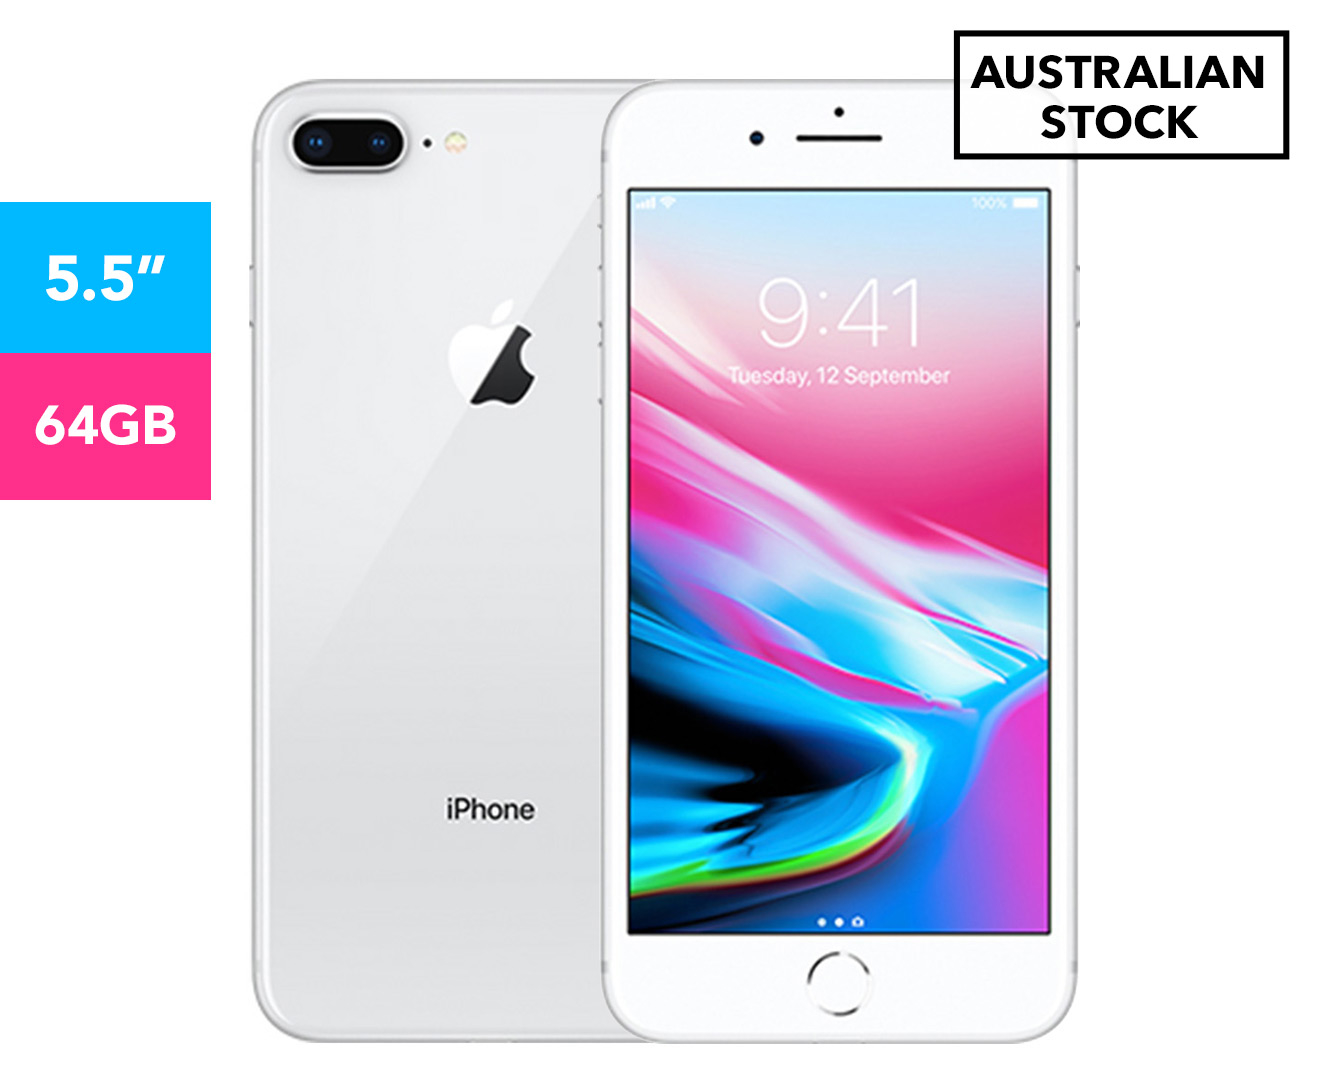 Apple iPhone 8 Plus 64GB Smartphone (AU Stock) Unlocked - Silver 